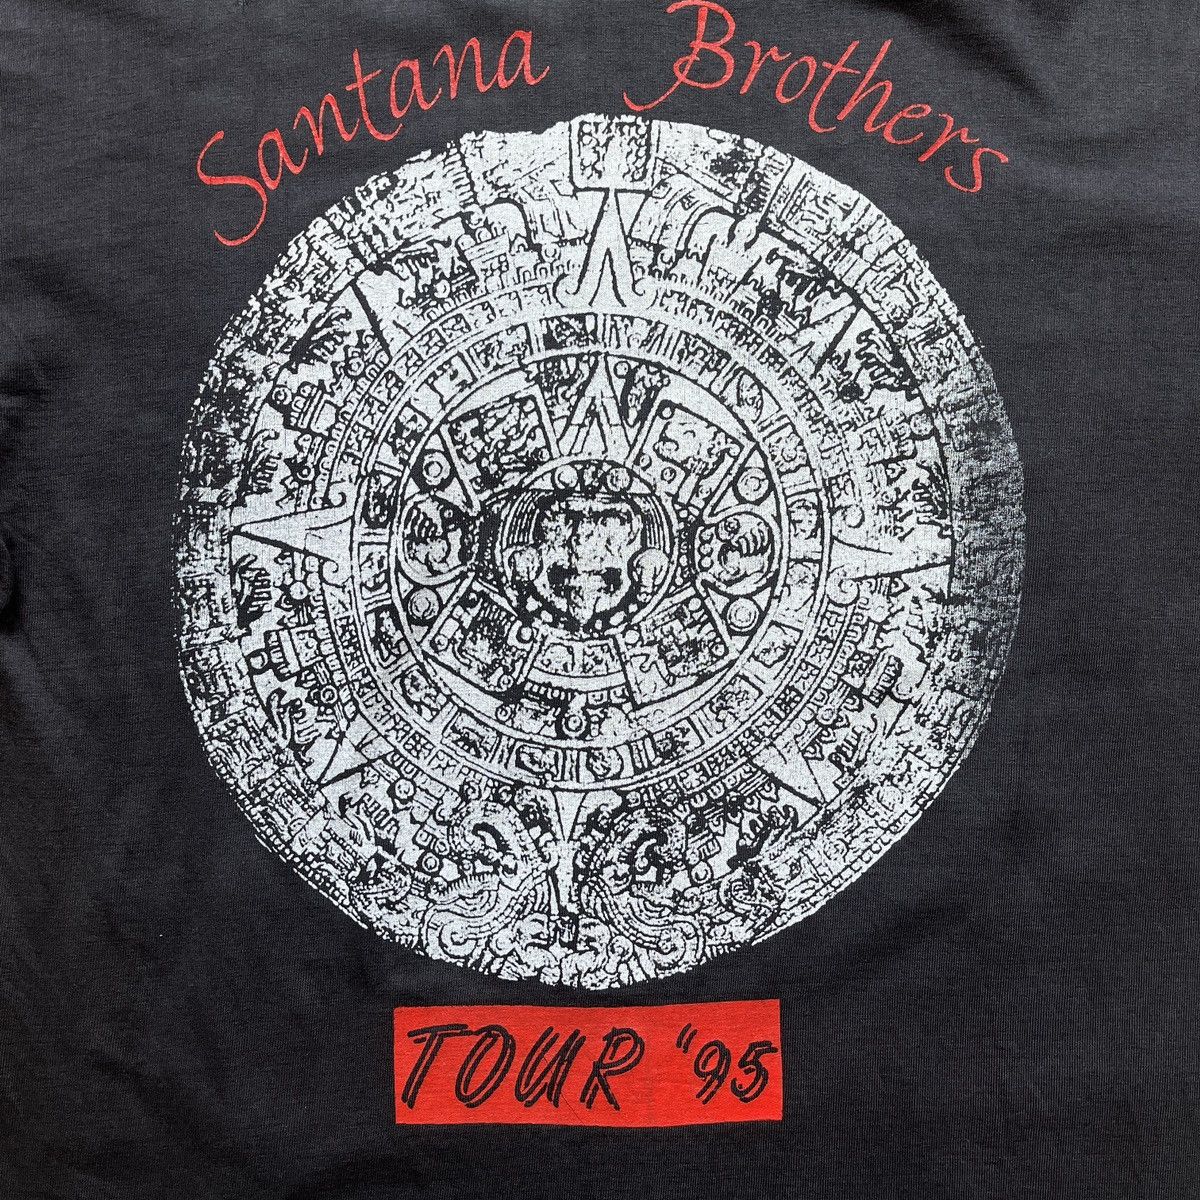 Vintage - Rock Santana Brothers In Concert Tour 95 TShirt - 21